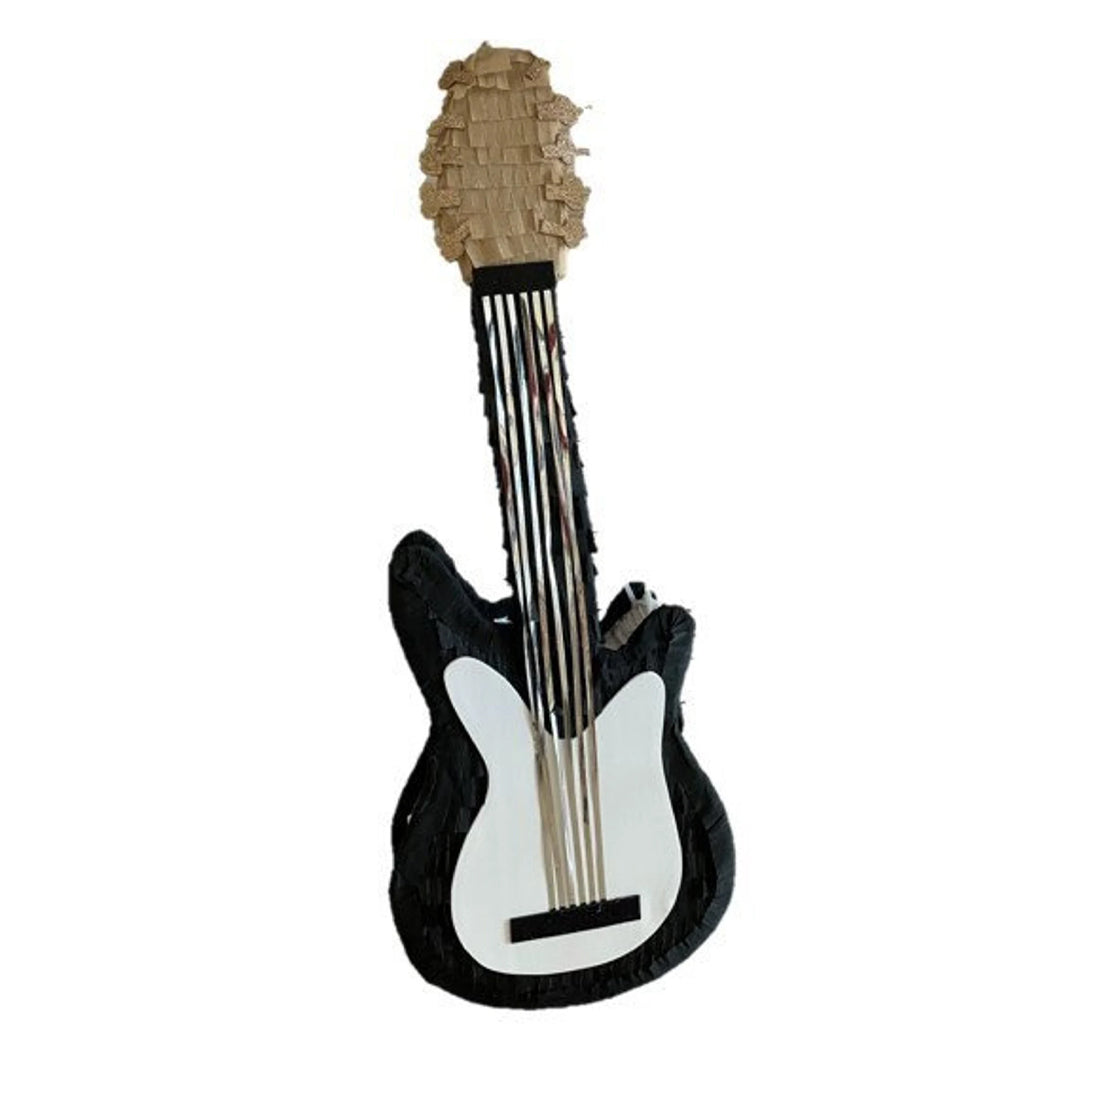 Black Electric Guitar Pinata 28 Inch Tall